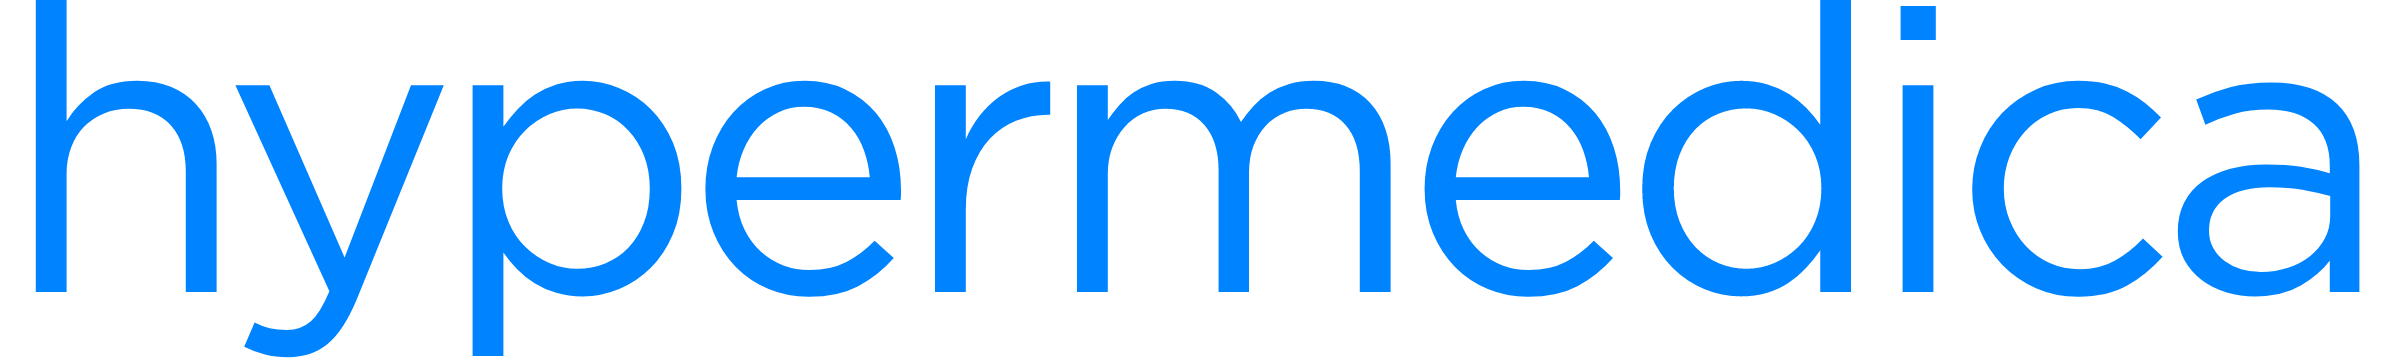 Hypermedica logo